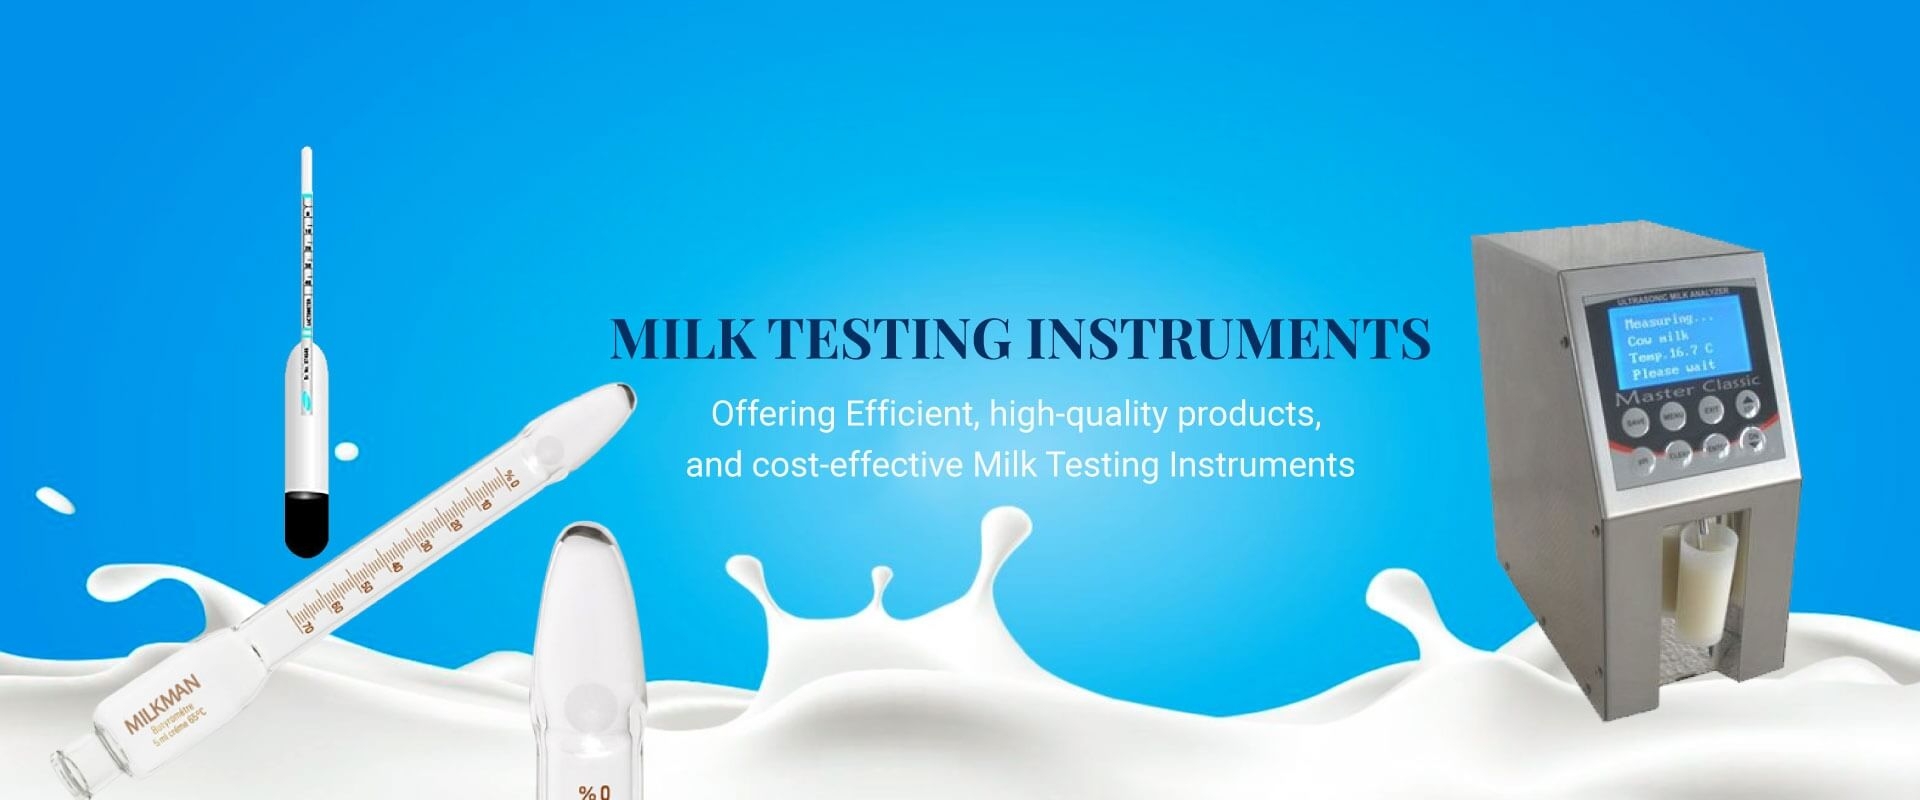 Milk Testing Instruments in Peru